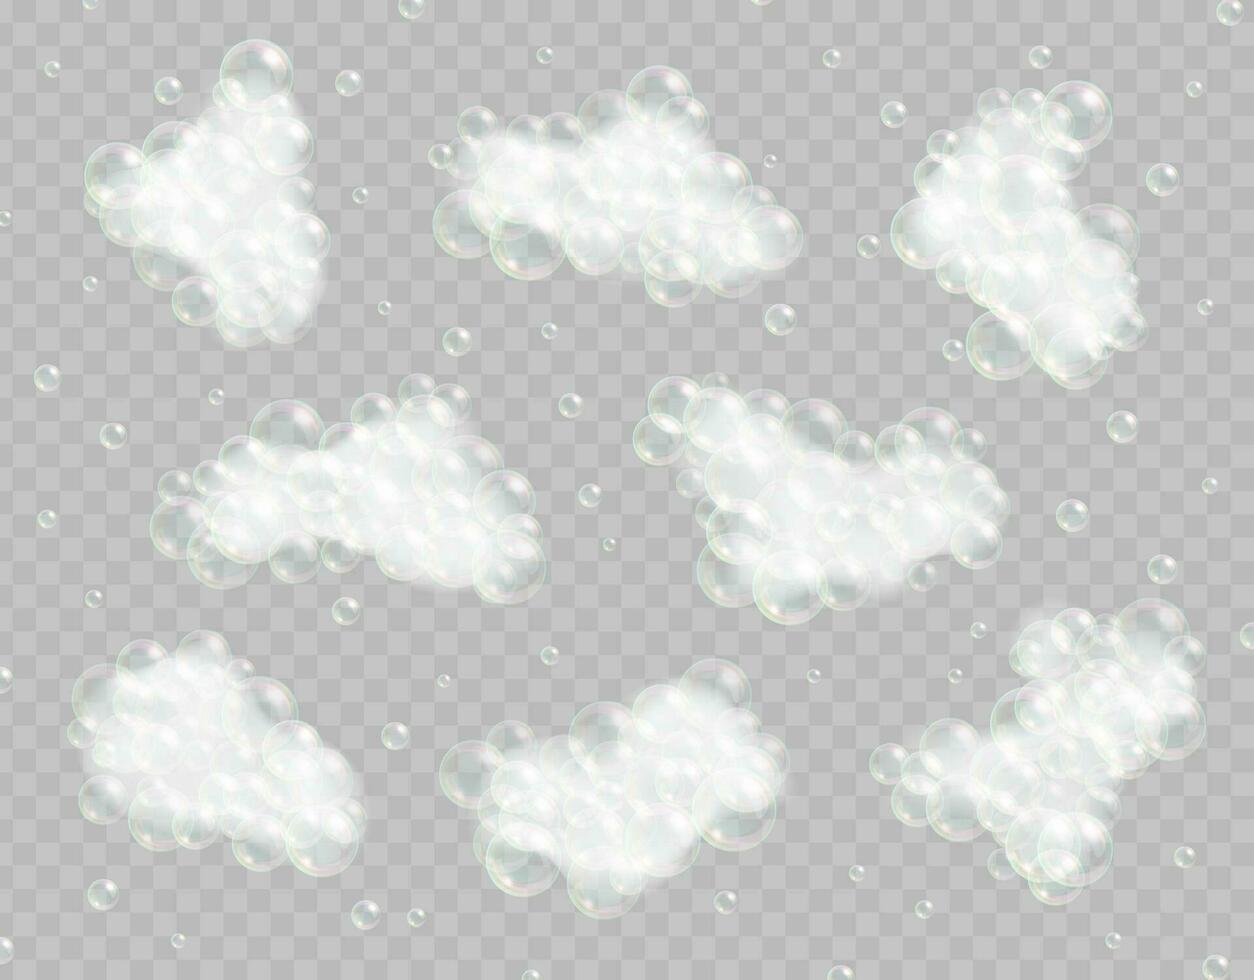 Soap foam with bubbles vector